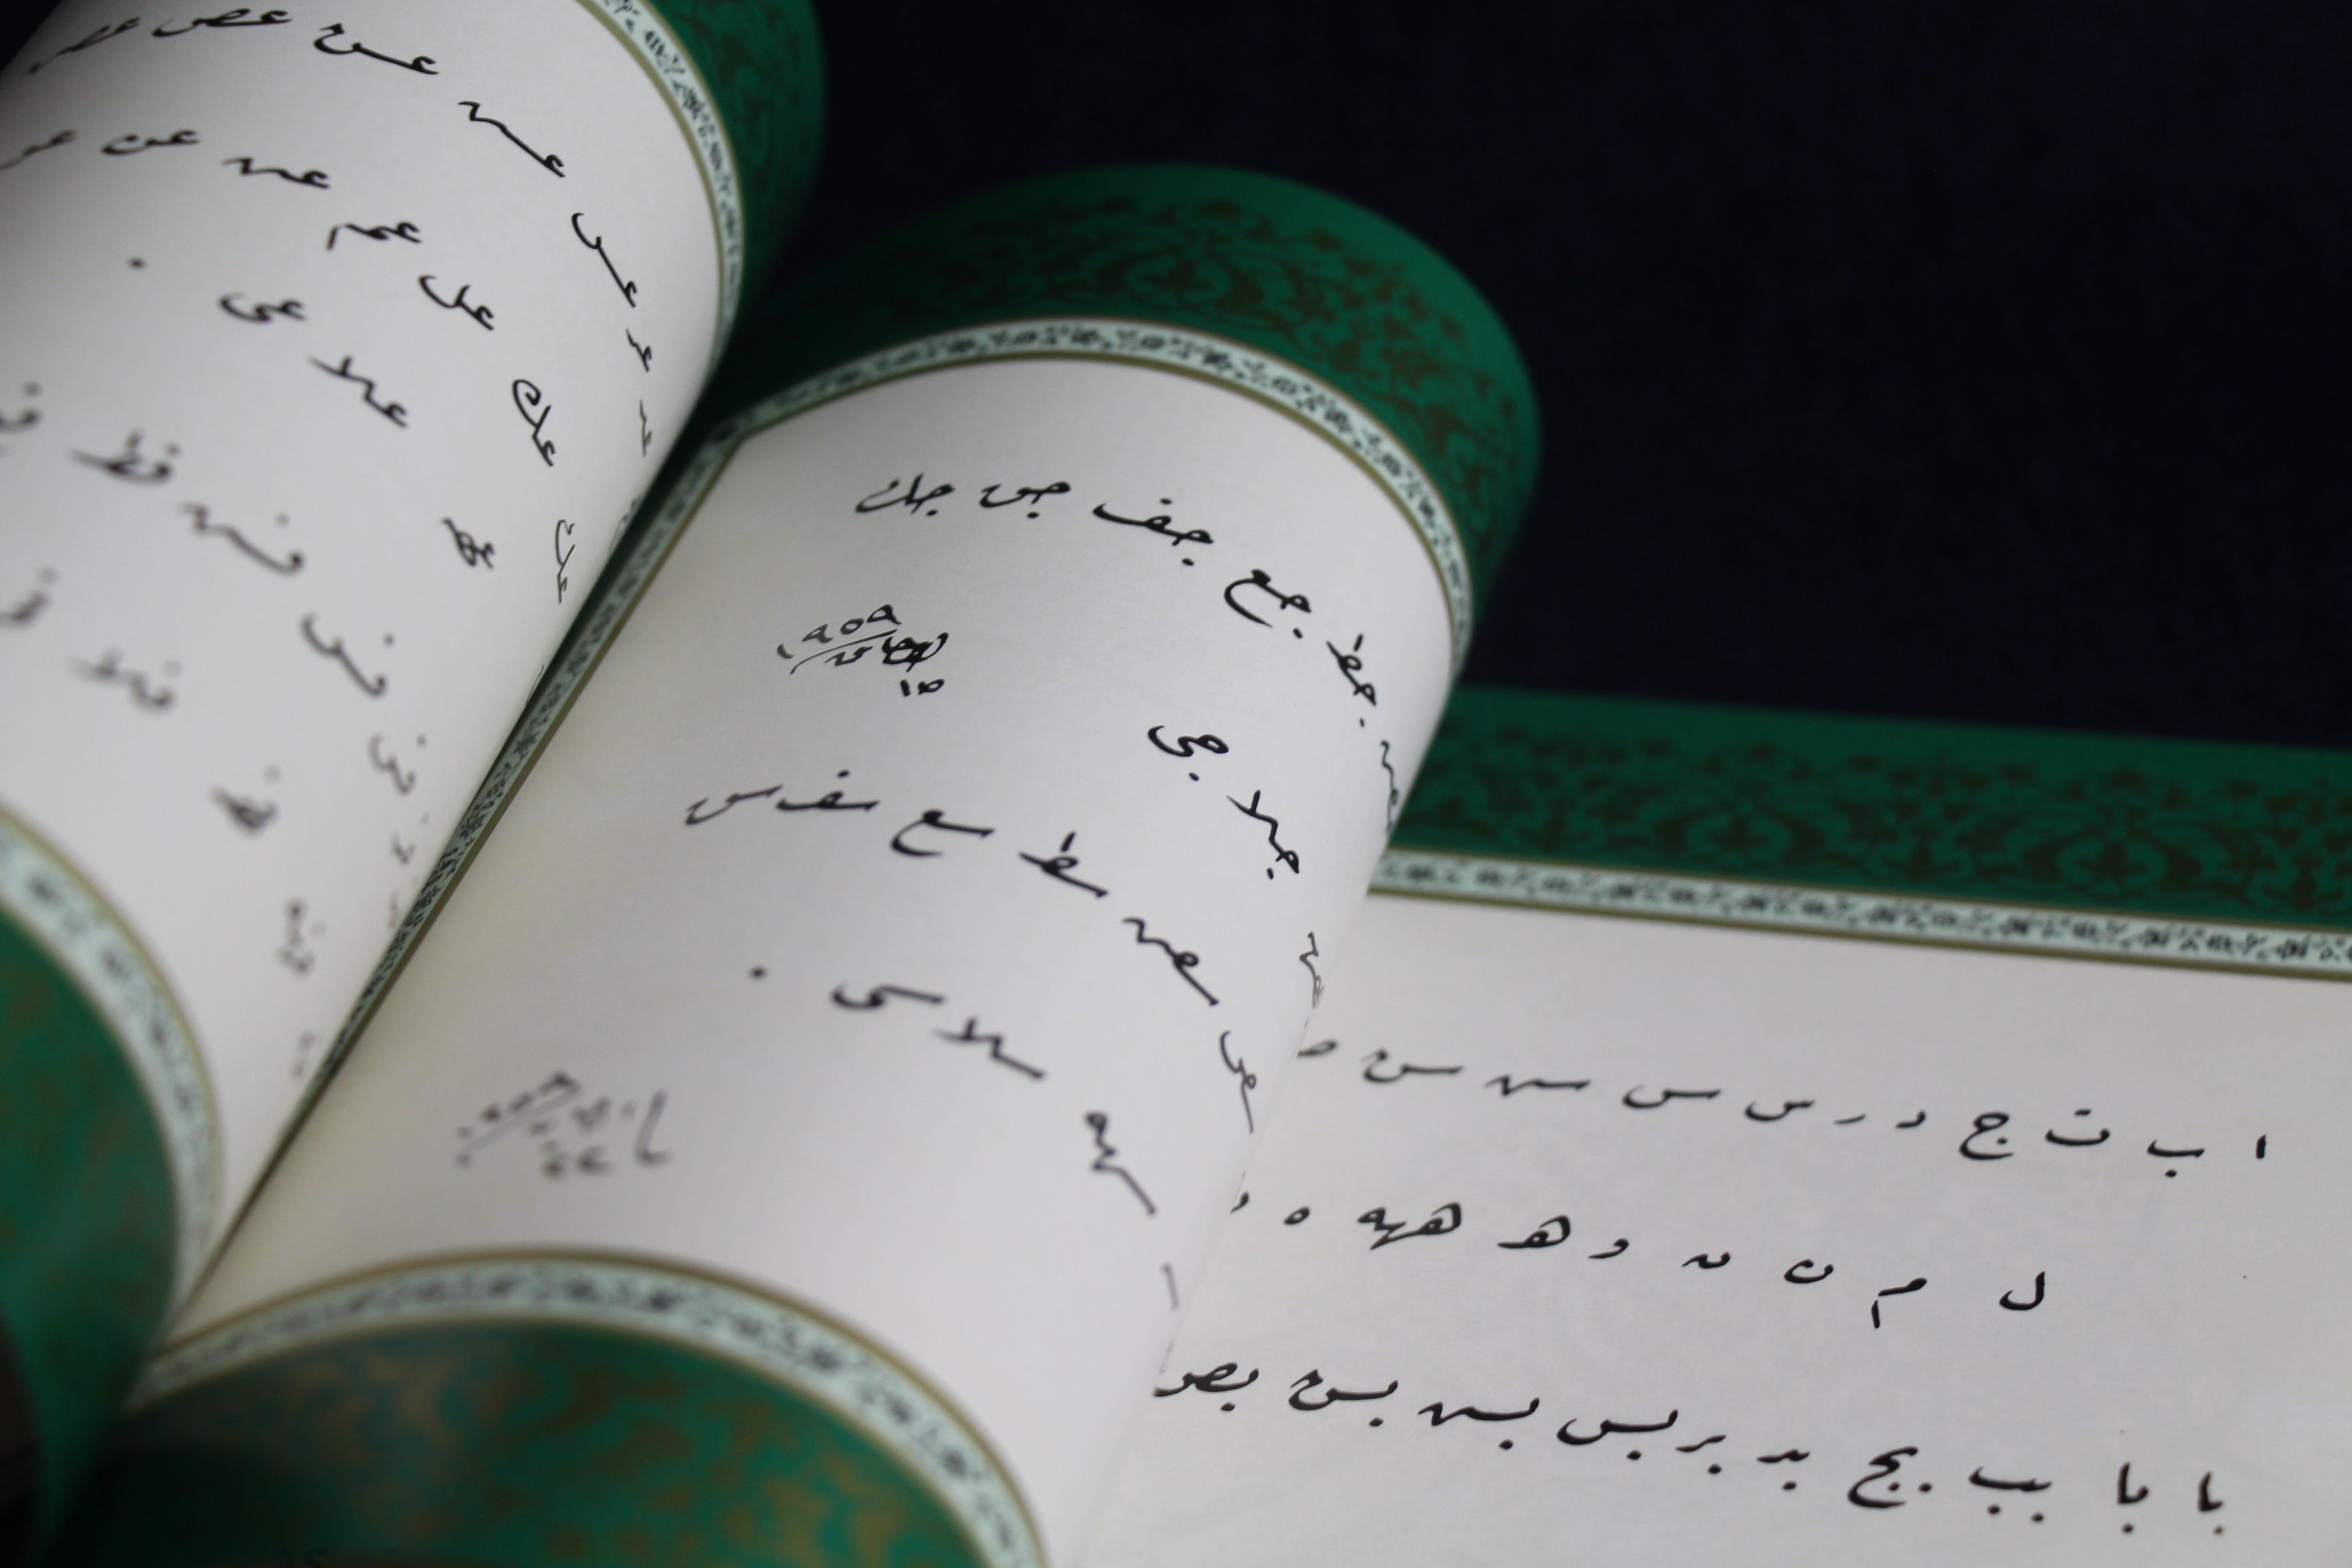 Halim Efendi - copy book (mashq) for Ruq'a, Diwani and Diwani Jali scripts